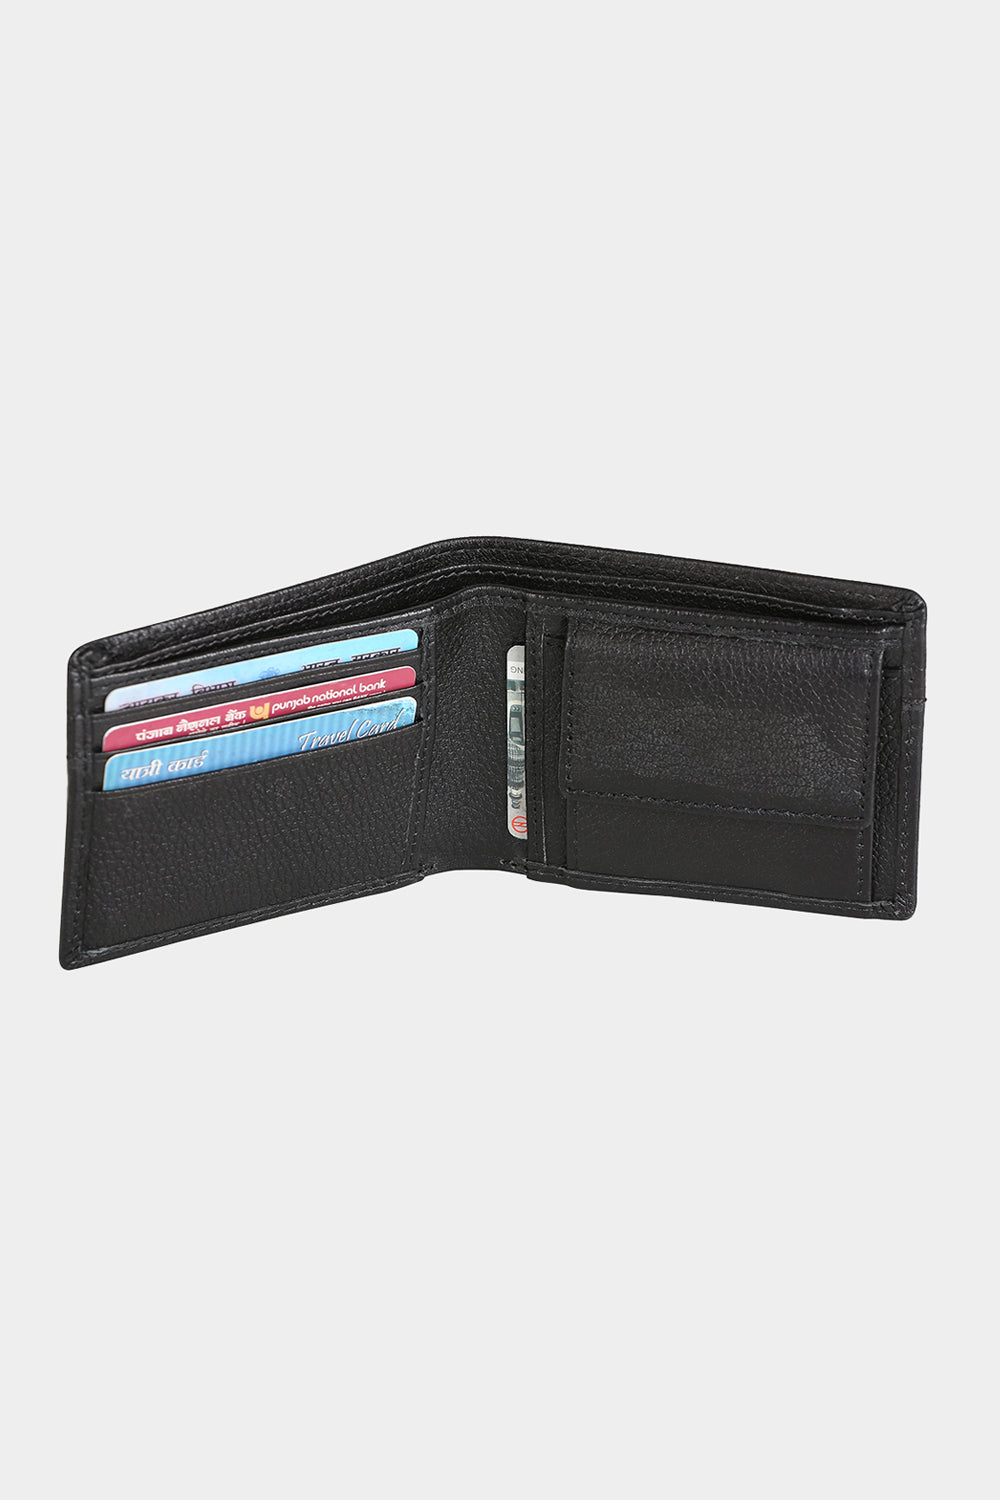 Justanned Plain Black Wallet